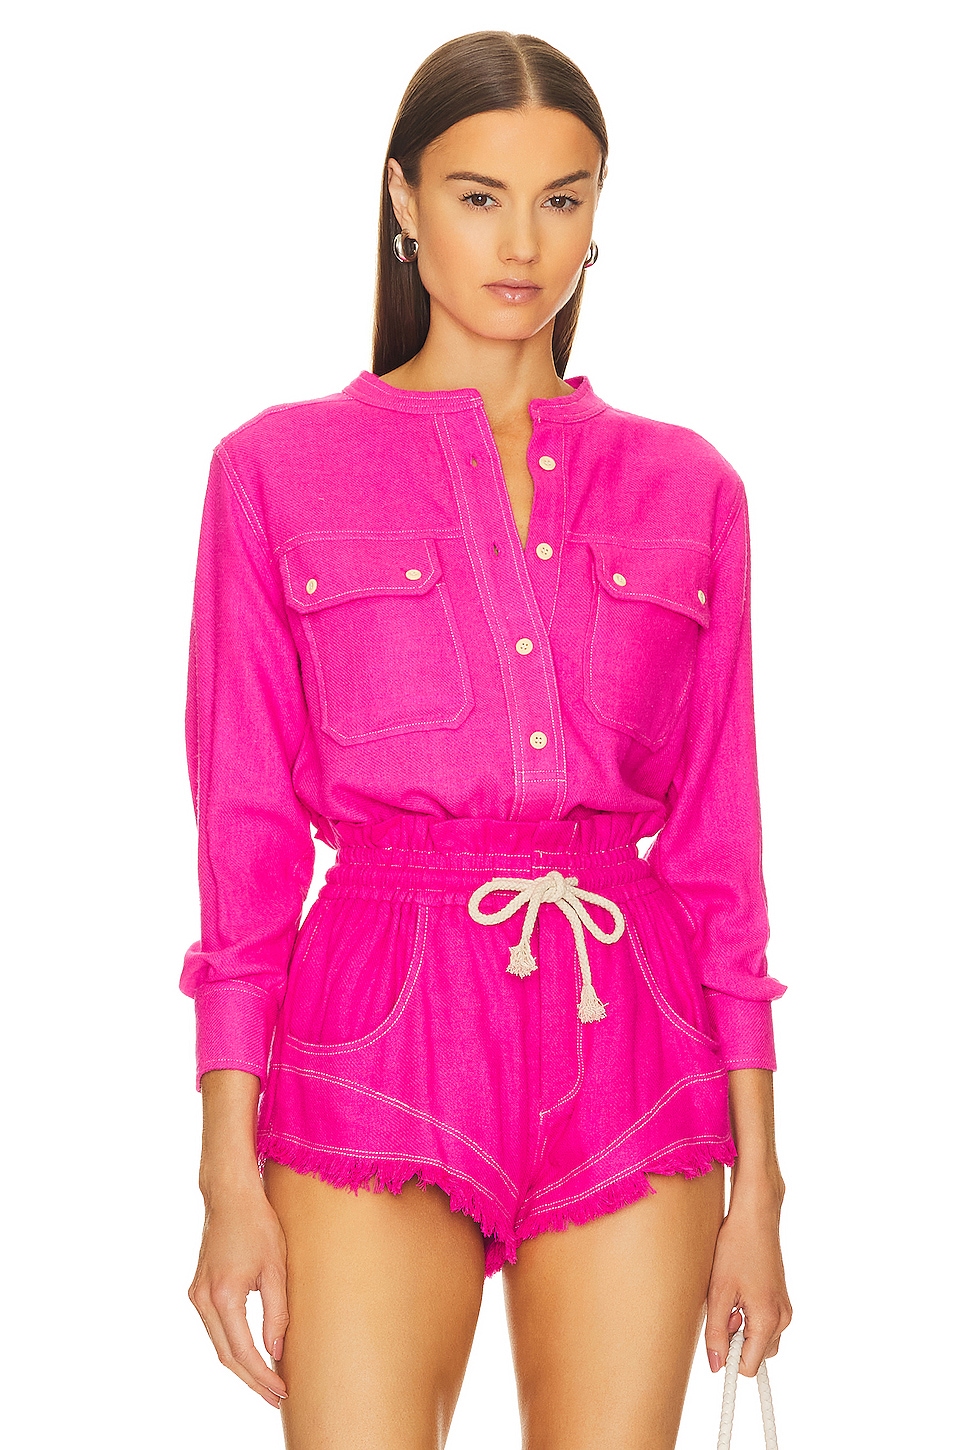 Isabel Marant Etoile Tecoyo Top in Neon Pink | REVOLVE